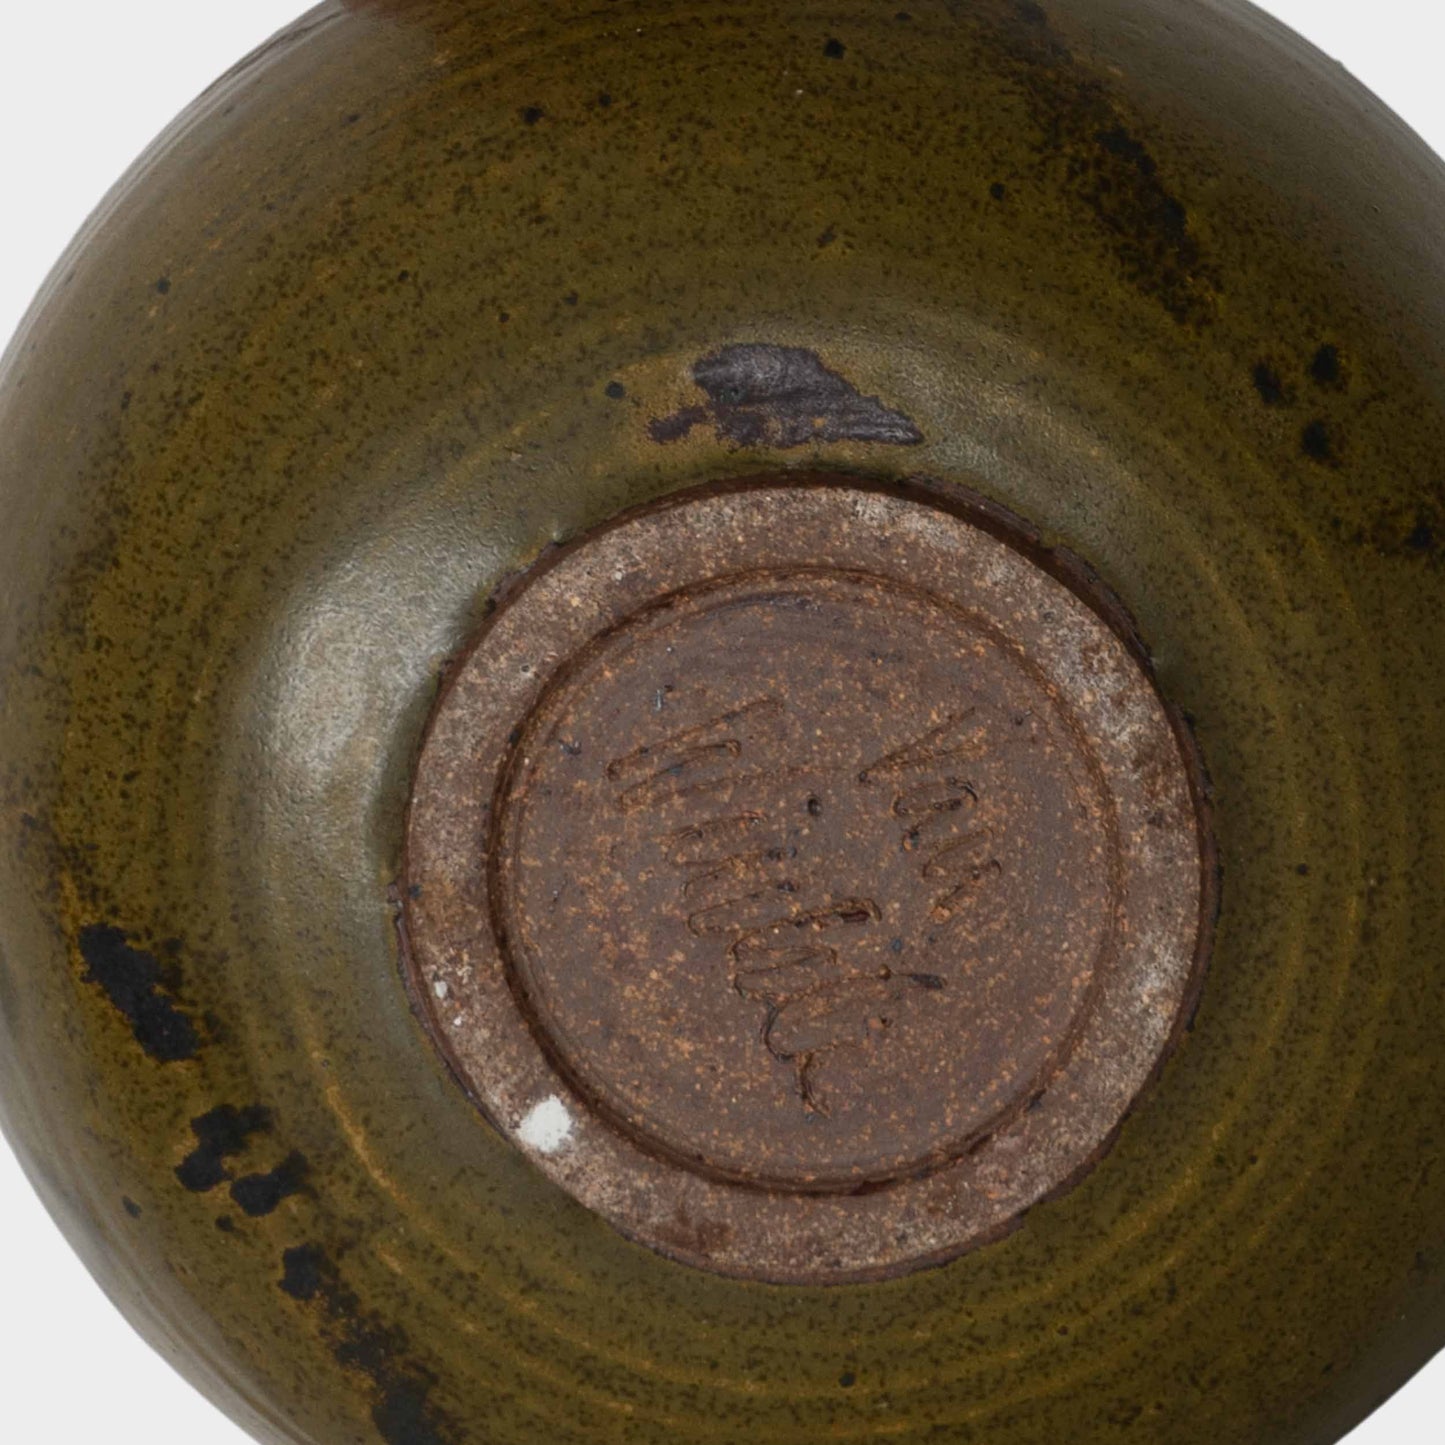 Vintage Olive Ceramic Bowl, North Carolina, 20th C.